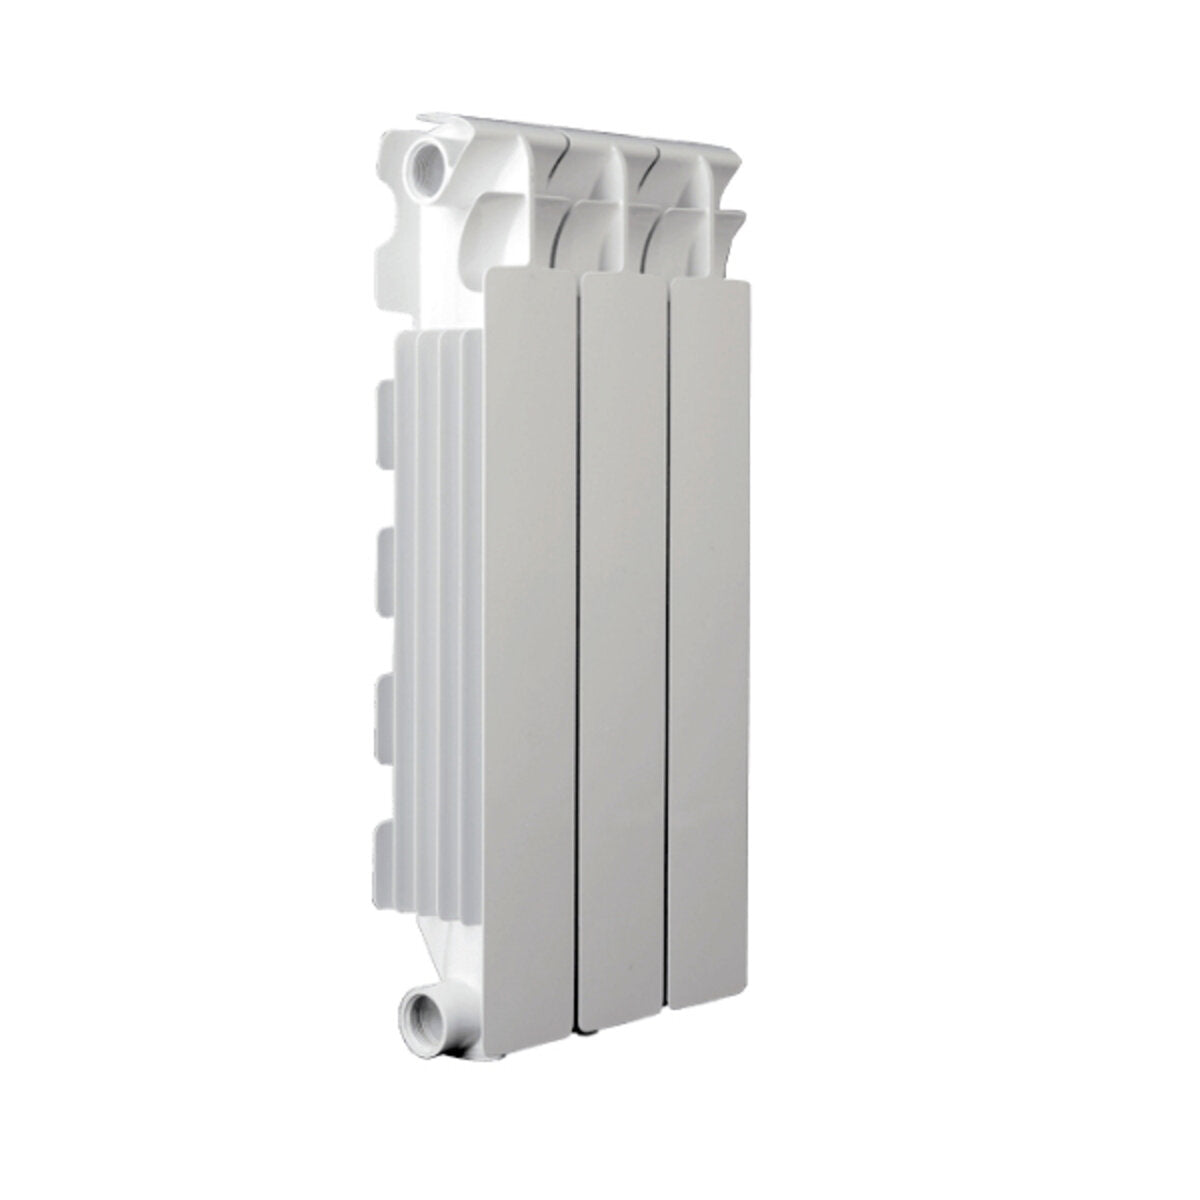 Fondital in die-cast aluminum calidor super b4 3 elements center distance 600 mm